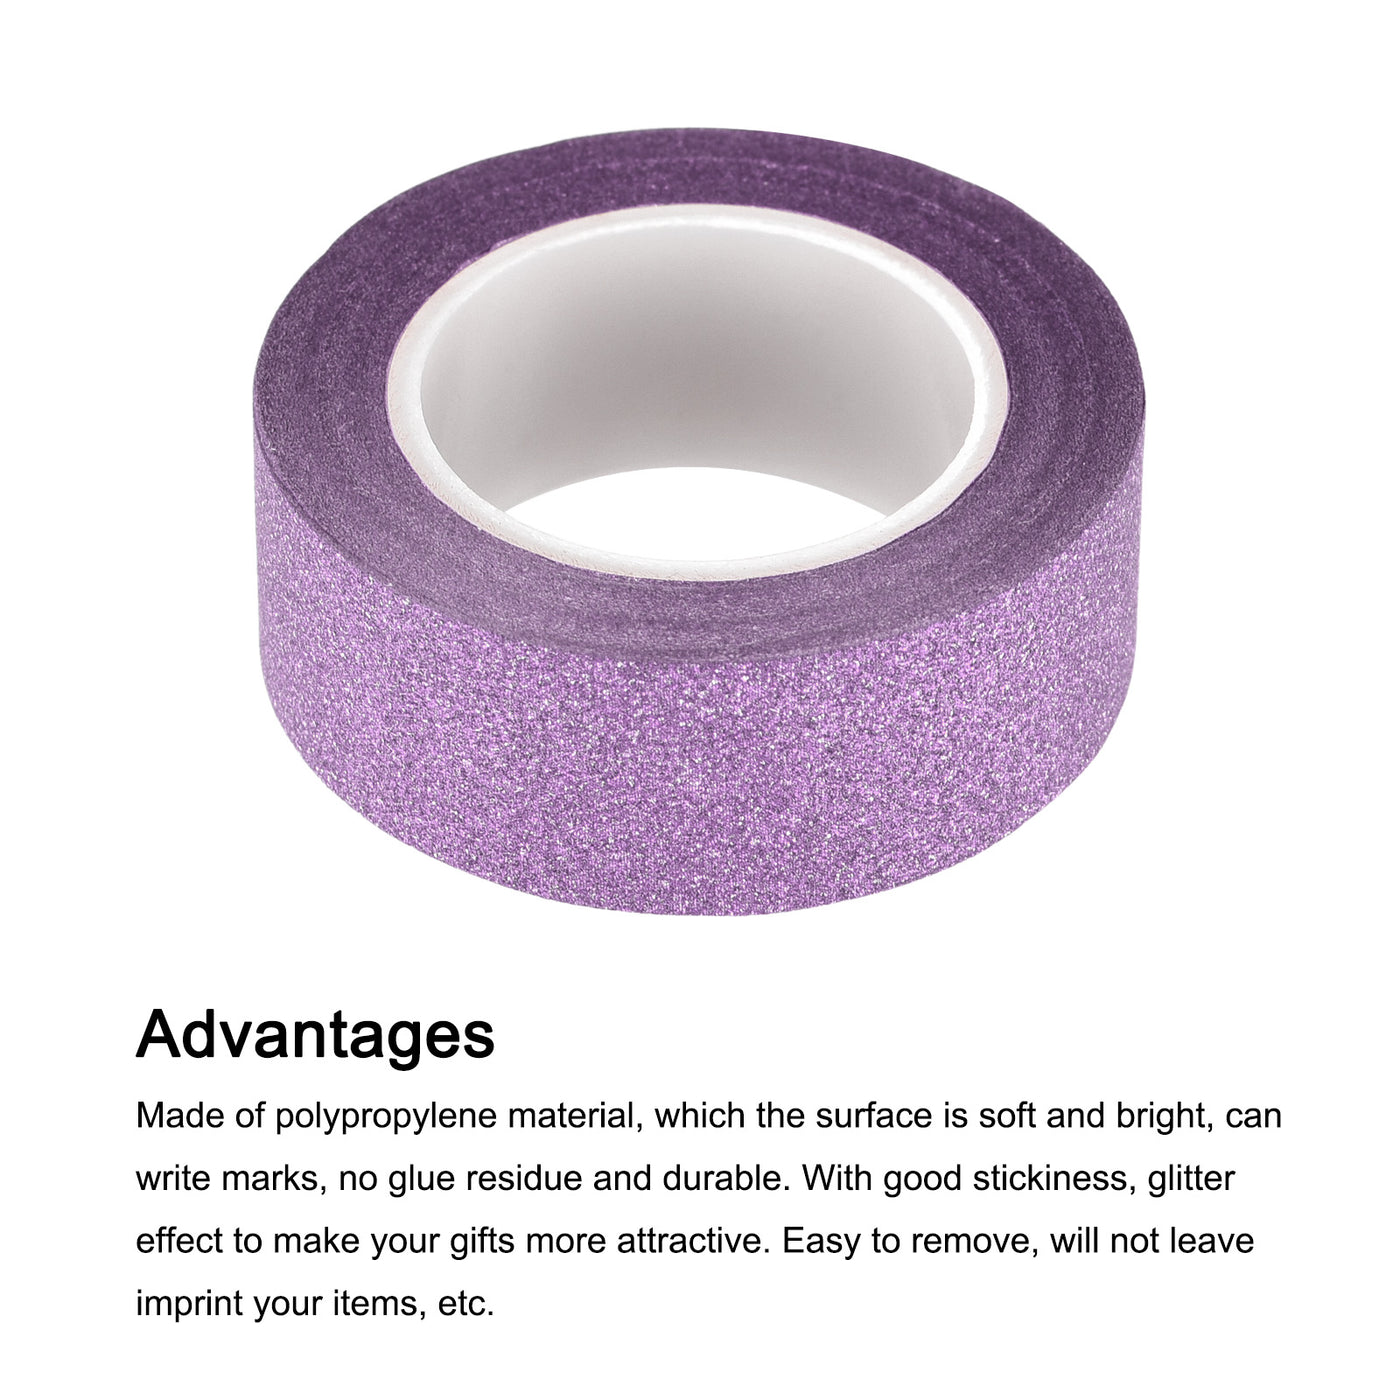 Harfington Glitter Tape, Decorative Craft Tape Self Adhesive Stick 1.5cmx10m Pink 3Pcs